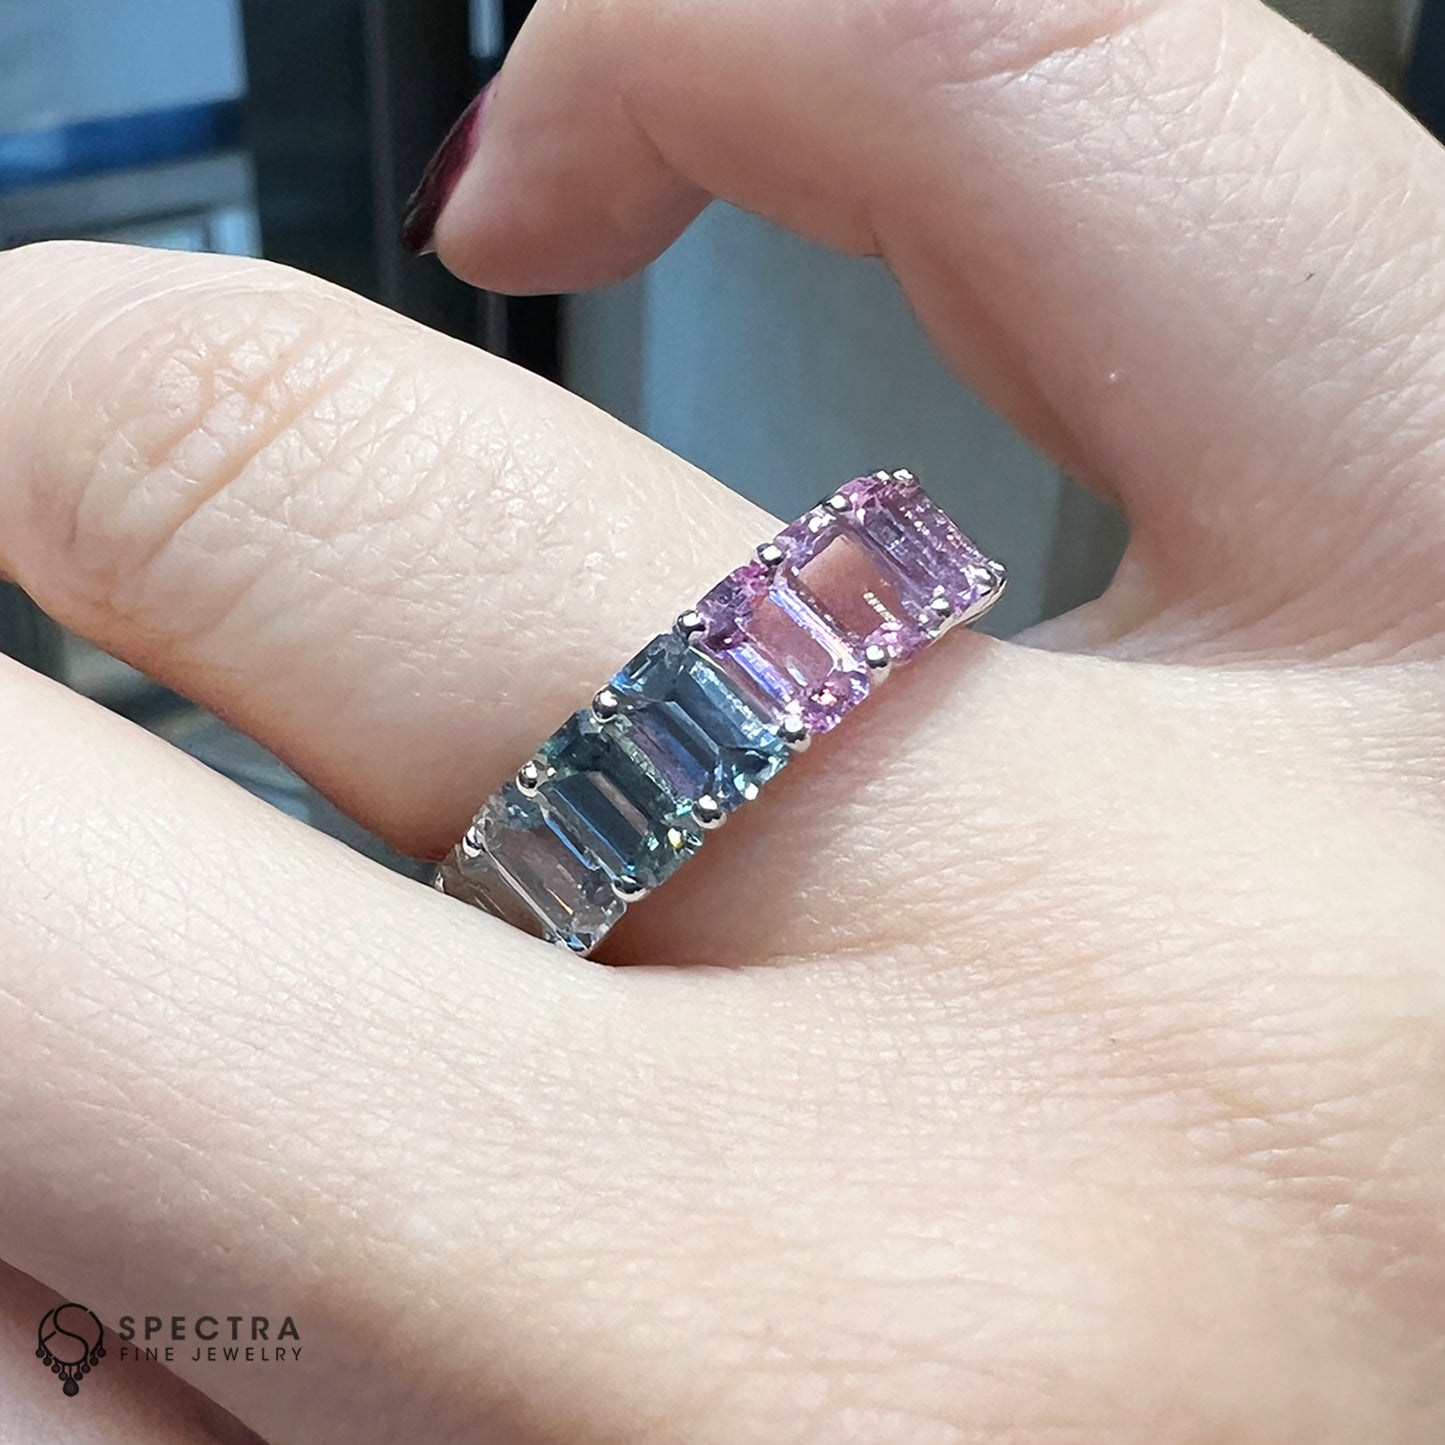 Spectra Fine Jewelry 5.94 ct Multi-Color Sapphire Eternity Band